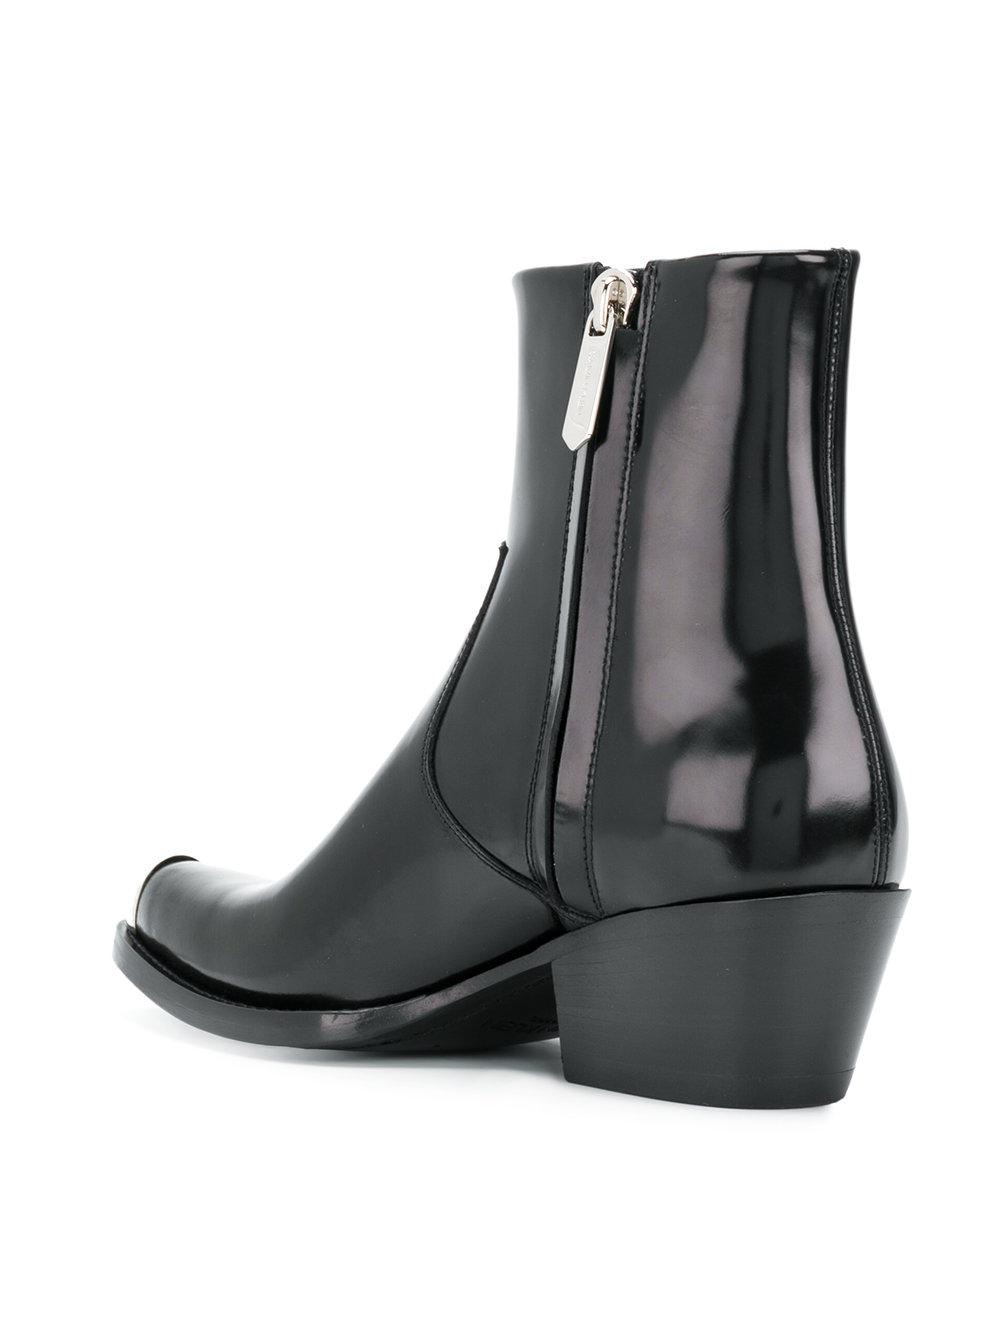 CALVIN KLEIN 205W39NYC Steel Toe Cap Ankle Boots in Black | Lyst